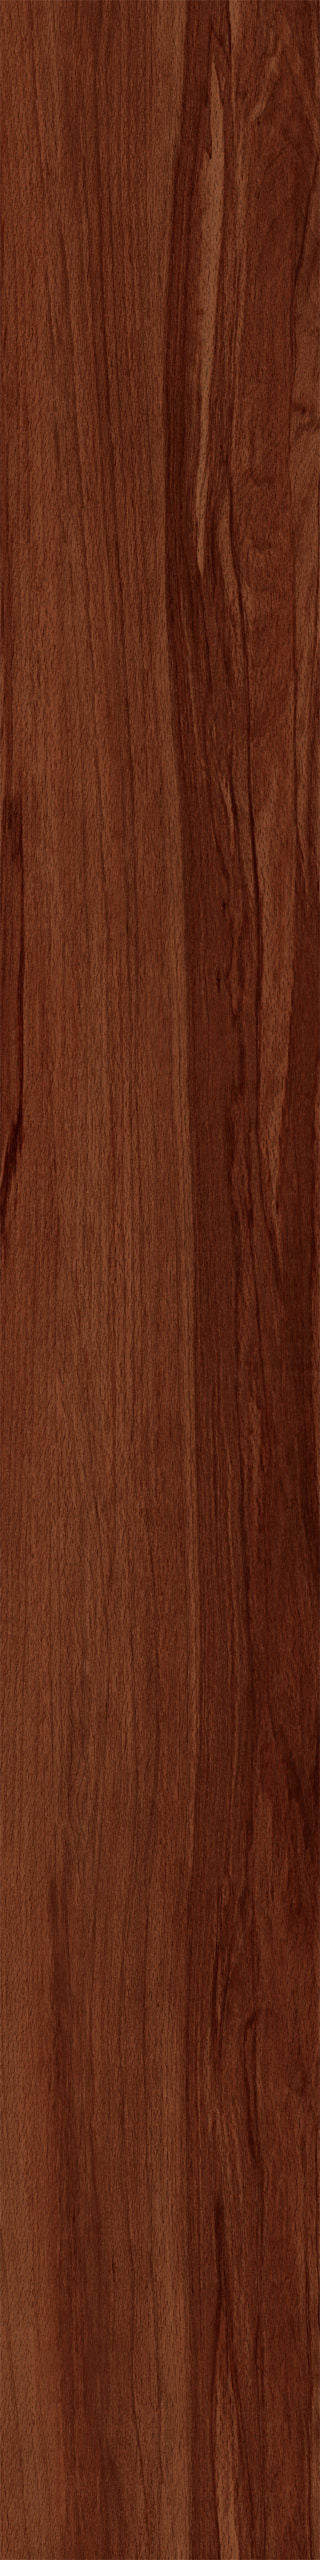 Flexco Natural Elements Sequoia Cherry NEW6D1O613 6" x 48" x 1/8" Luxury Vinyl Plank (36 SF/Box)